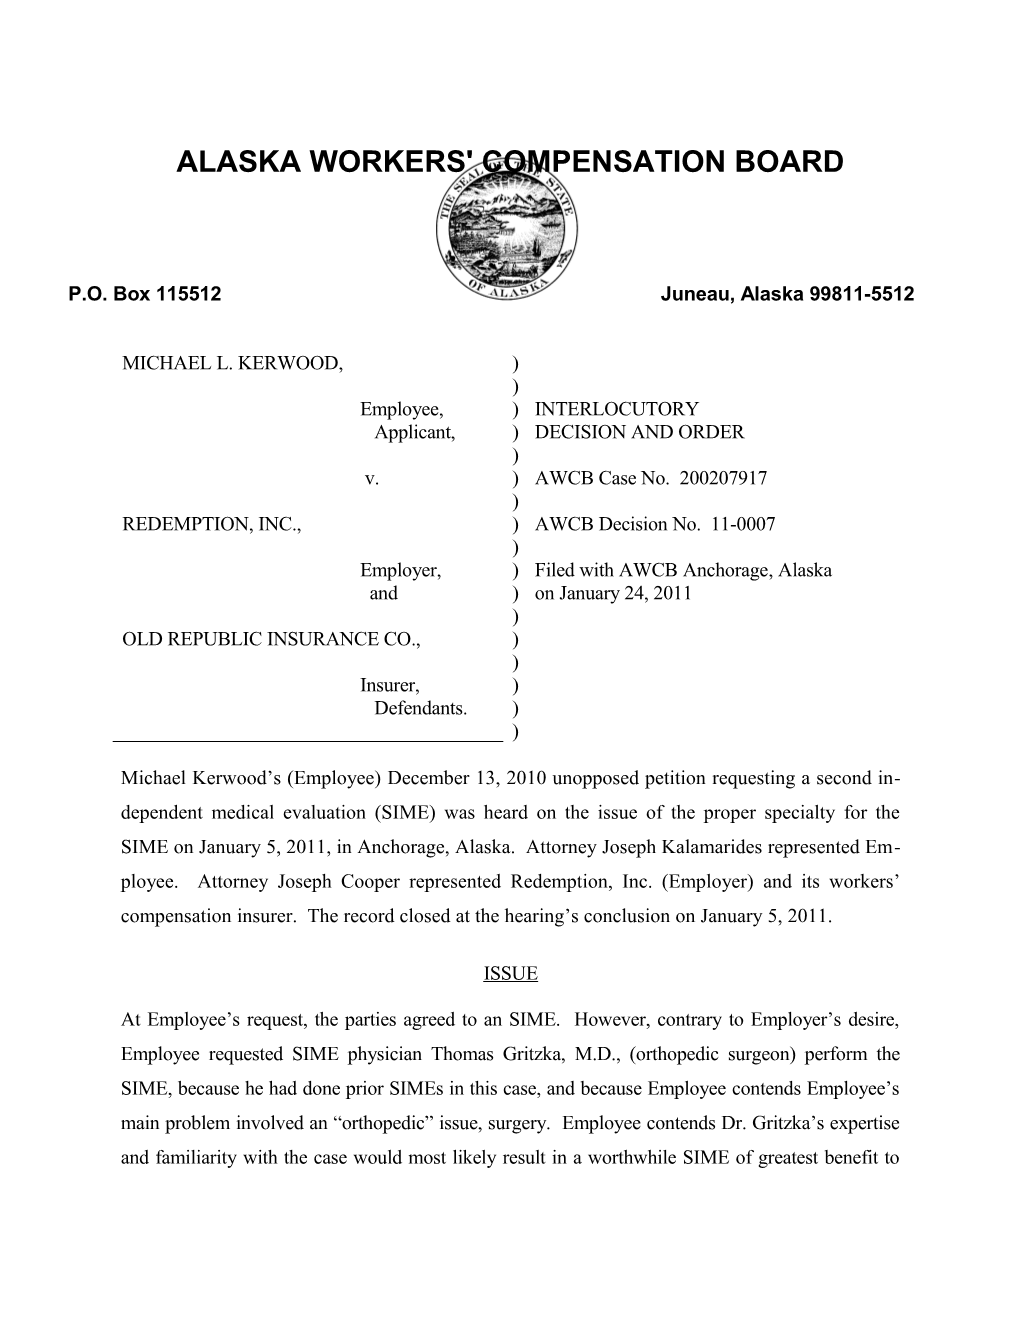 Alaska Workers' Compensation Board s26